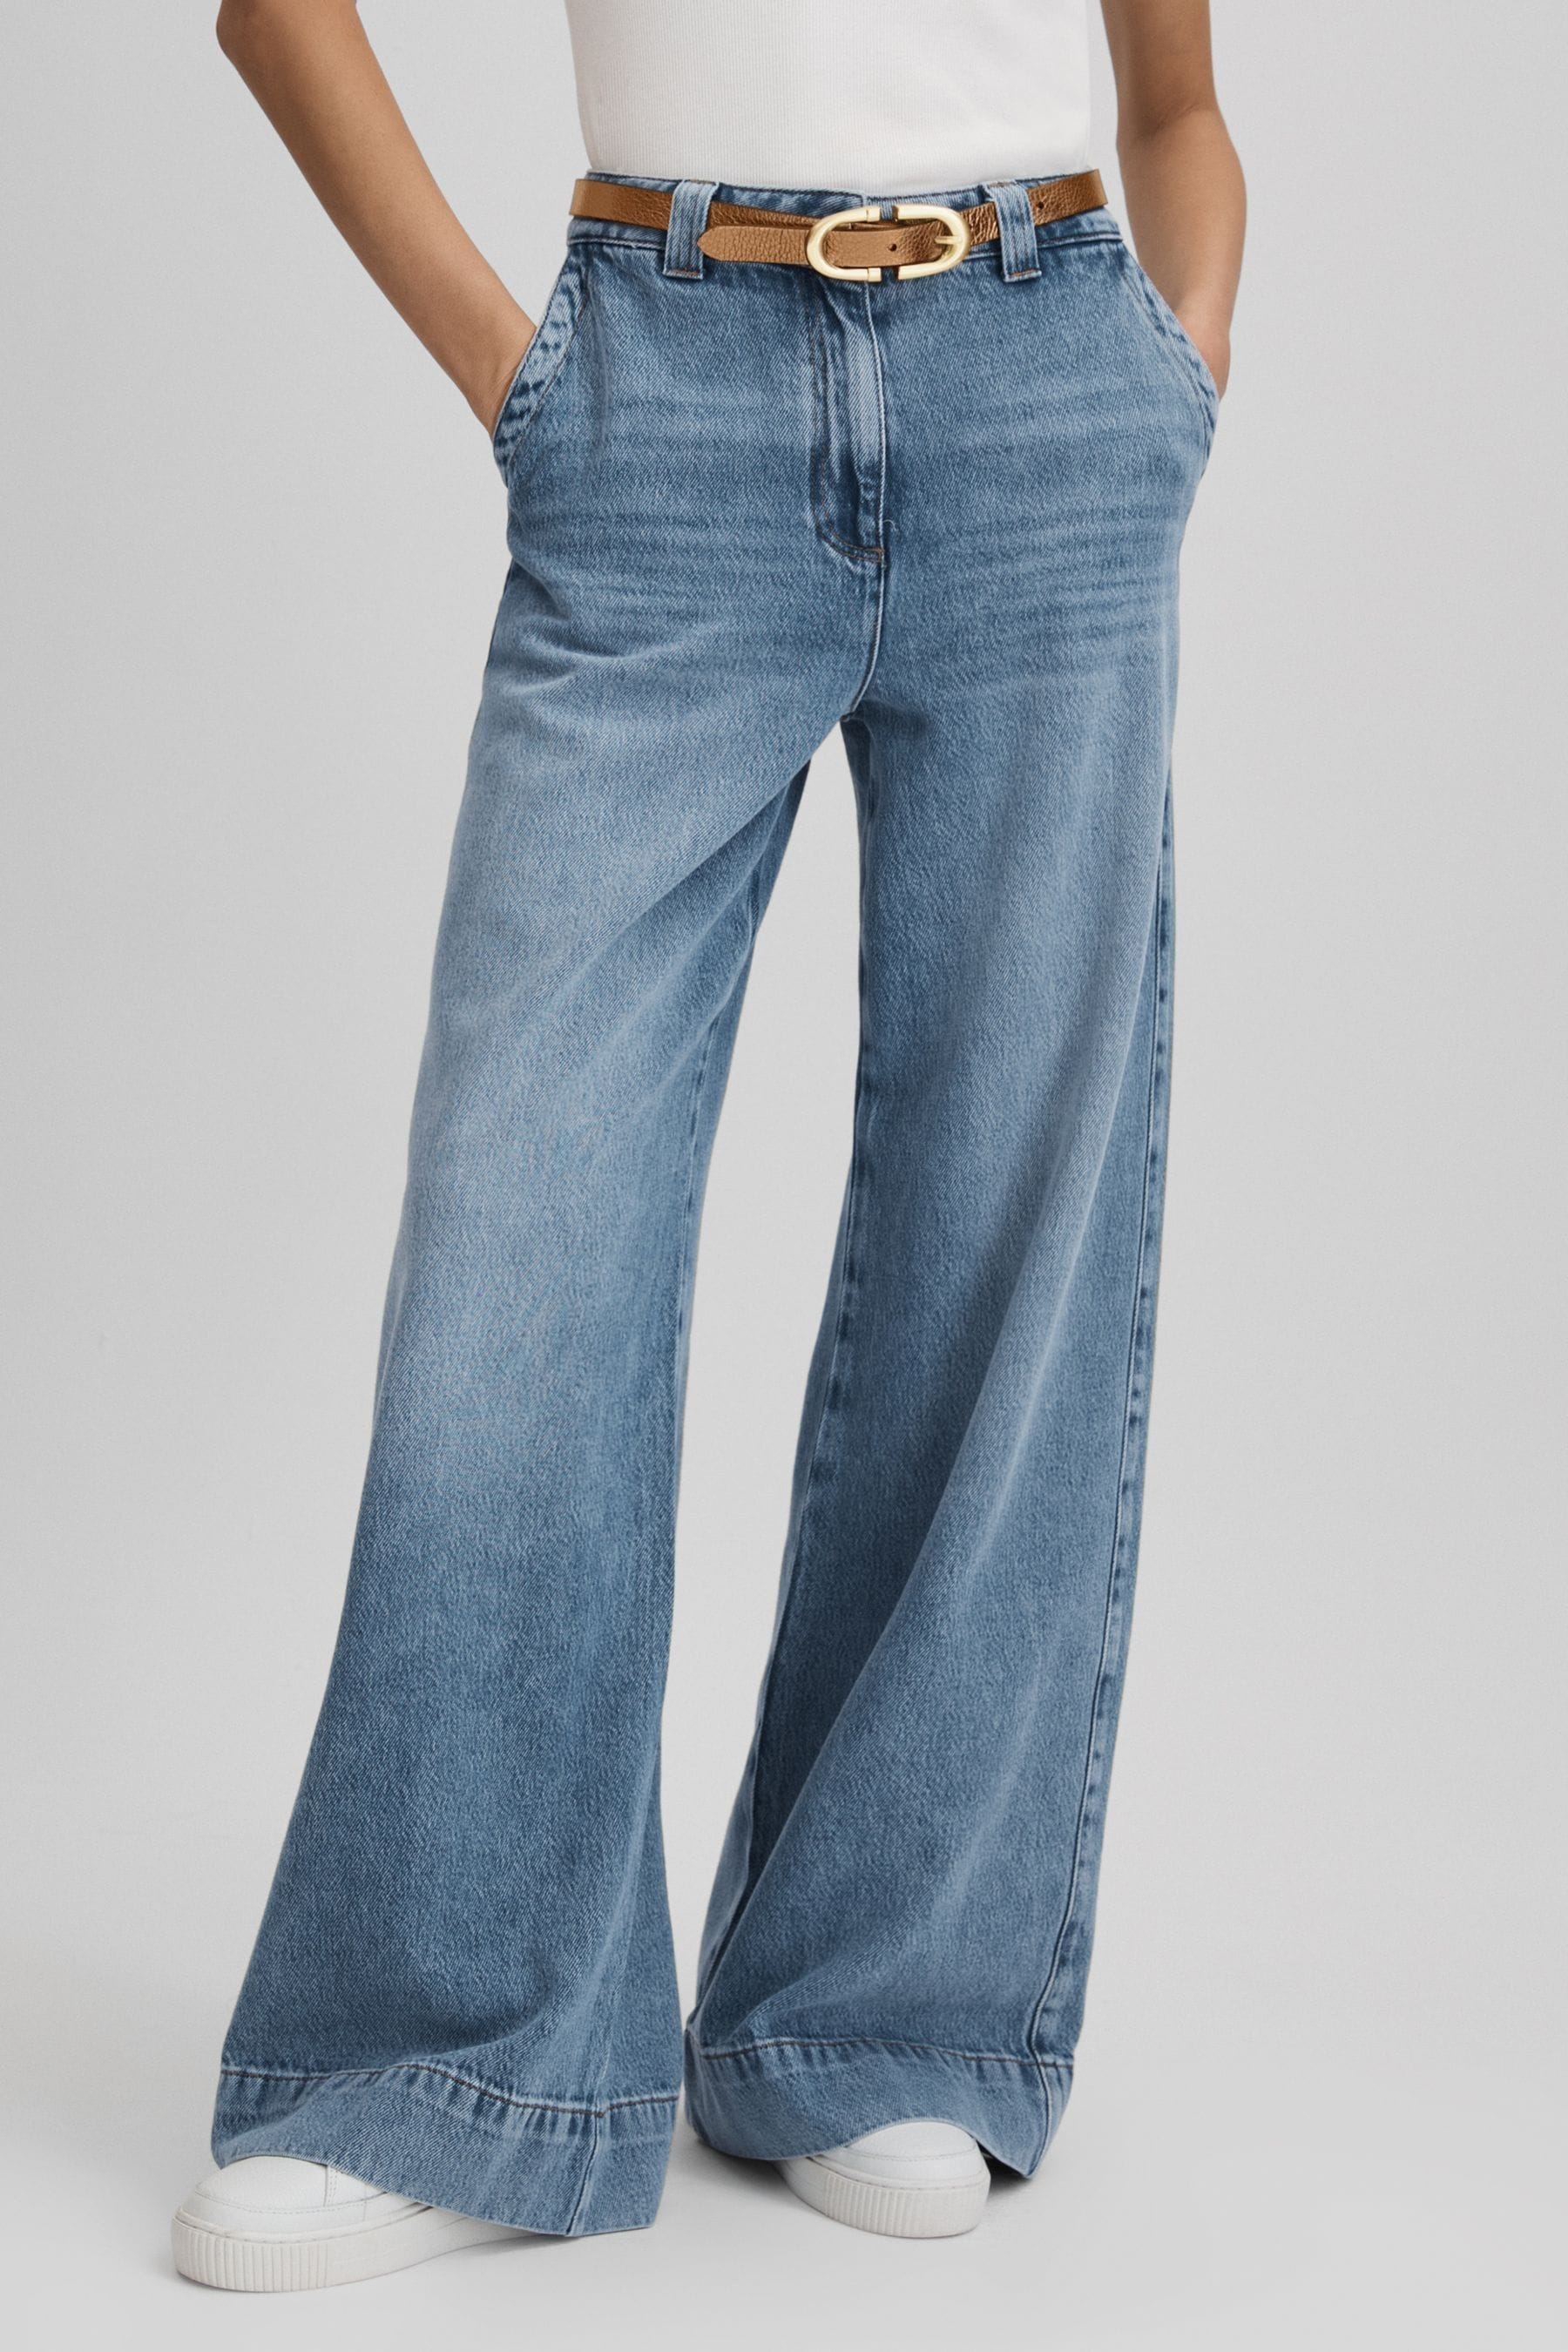 Reiss Olivia - Light Blue Wide Leg Contrast Stitch Jeans, Us 24 R